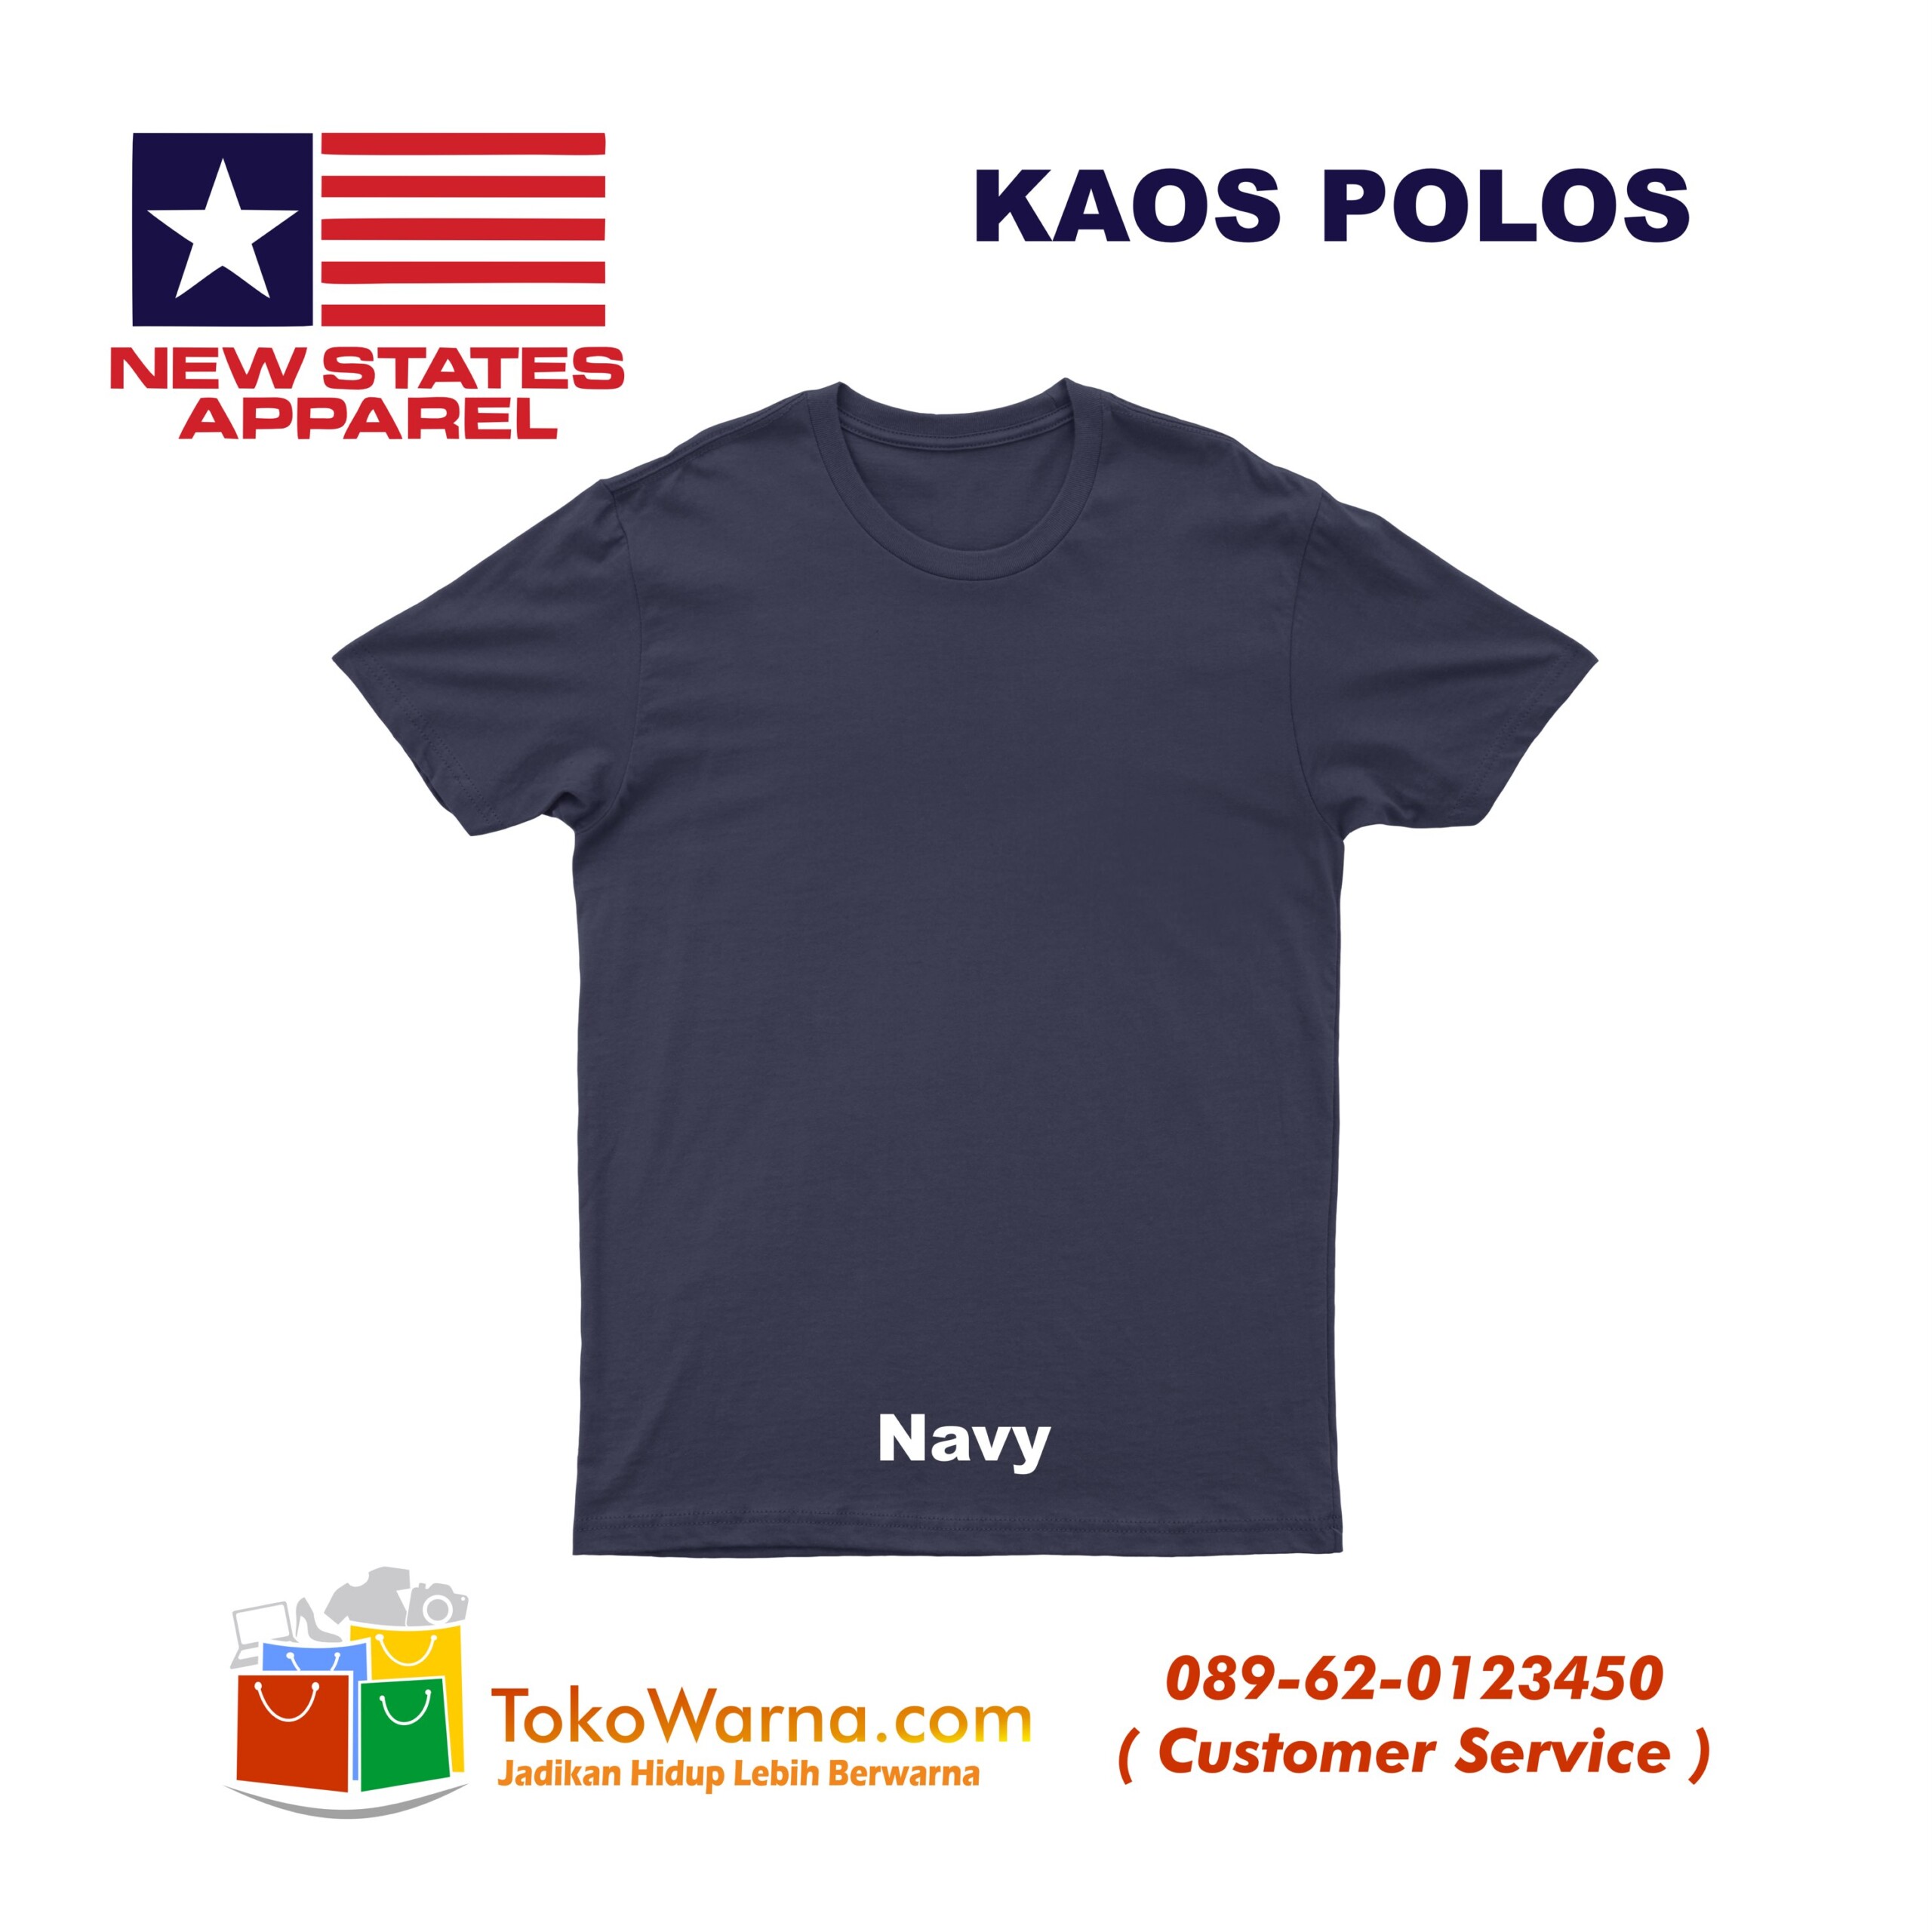 (NSA) New States Apparel Soft Tee 30s Kaos Polos Navy